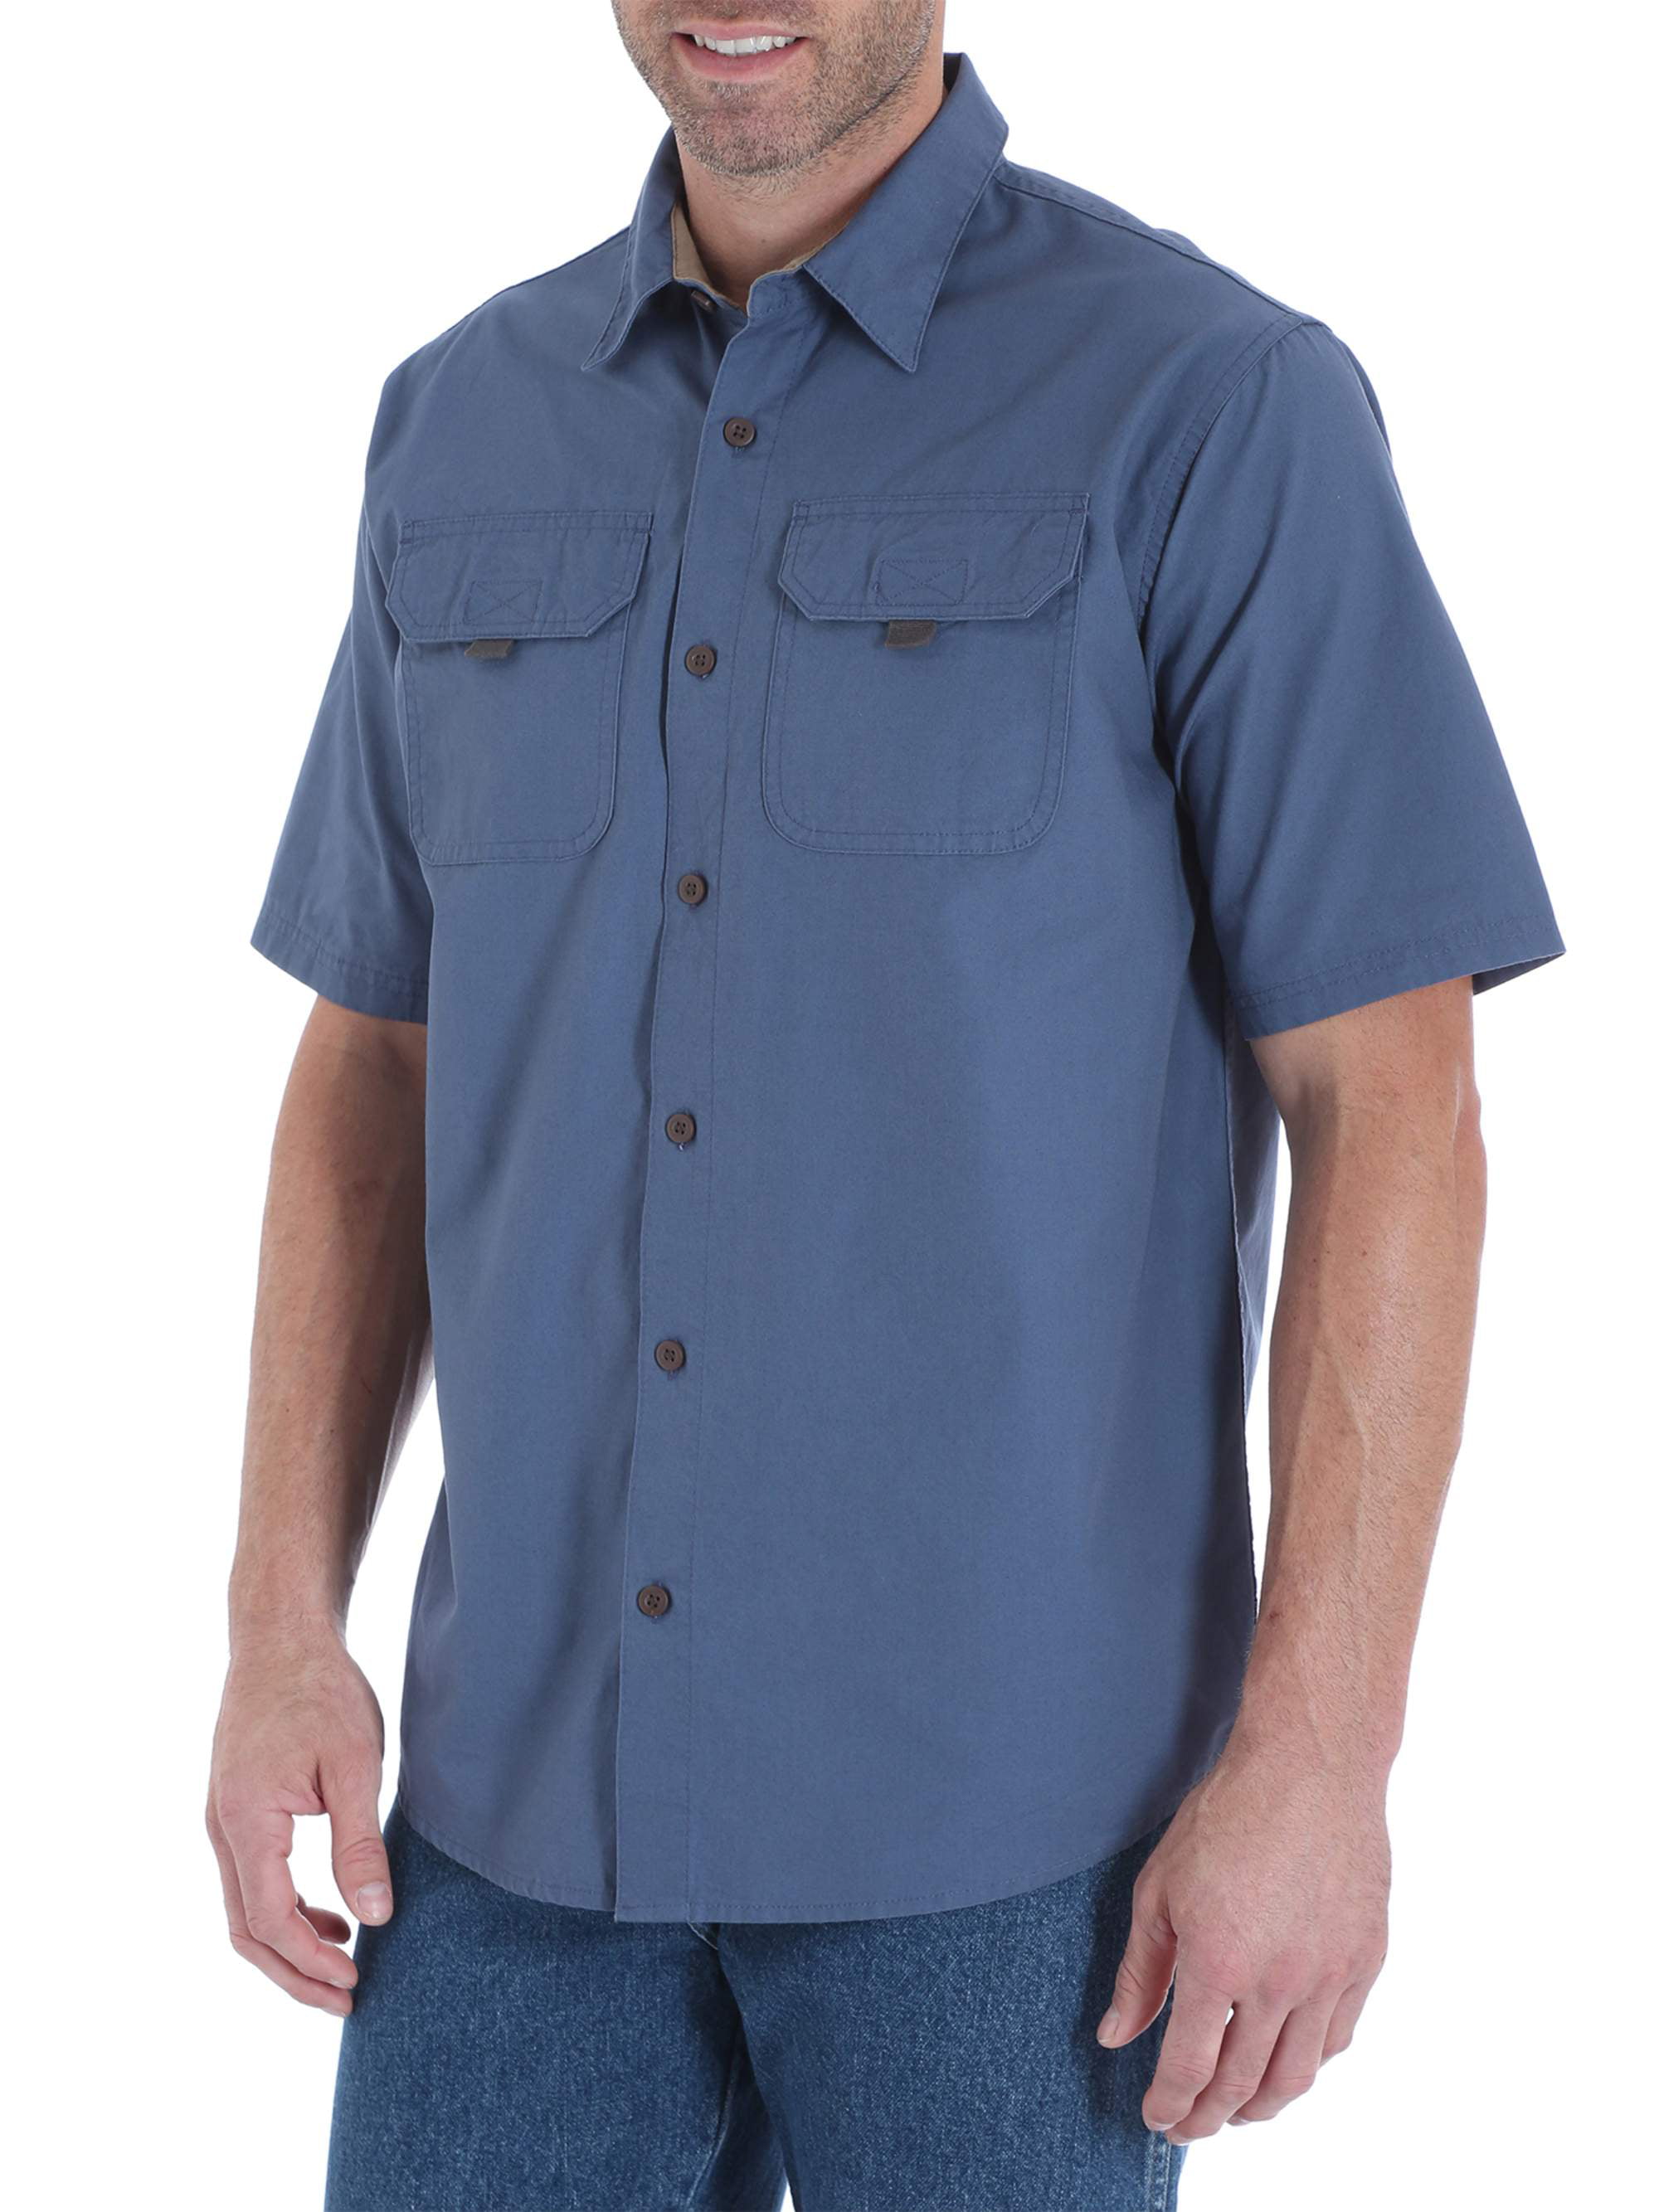 Keaac Men Fashion Casual Pocket Shirts Short Sleeve Business Button Down Shirts 